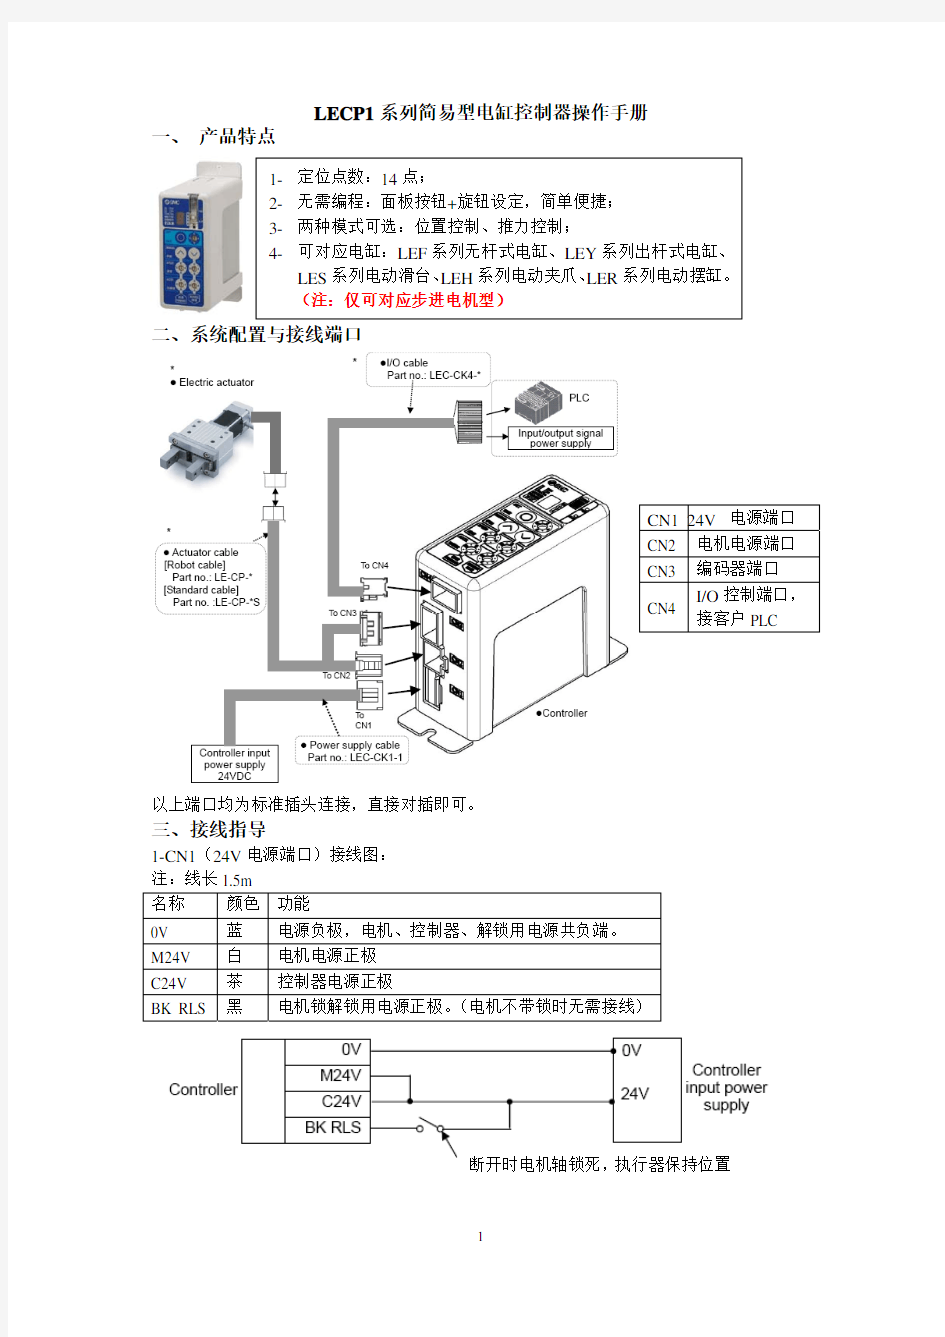 LECP1系列简易型电缸控制器操作手册